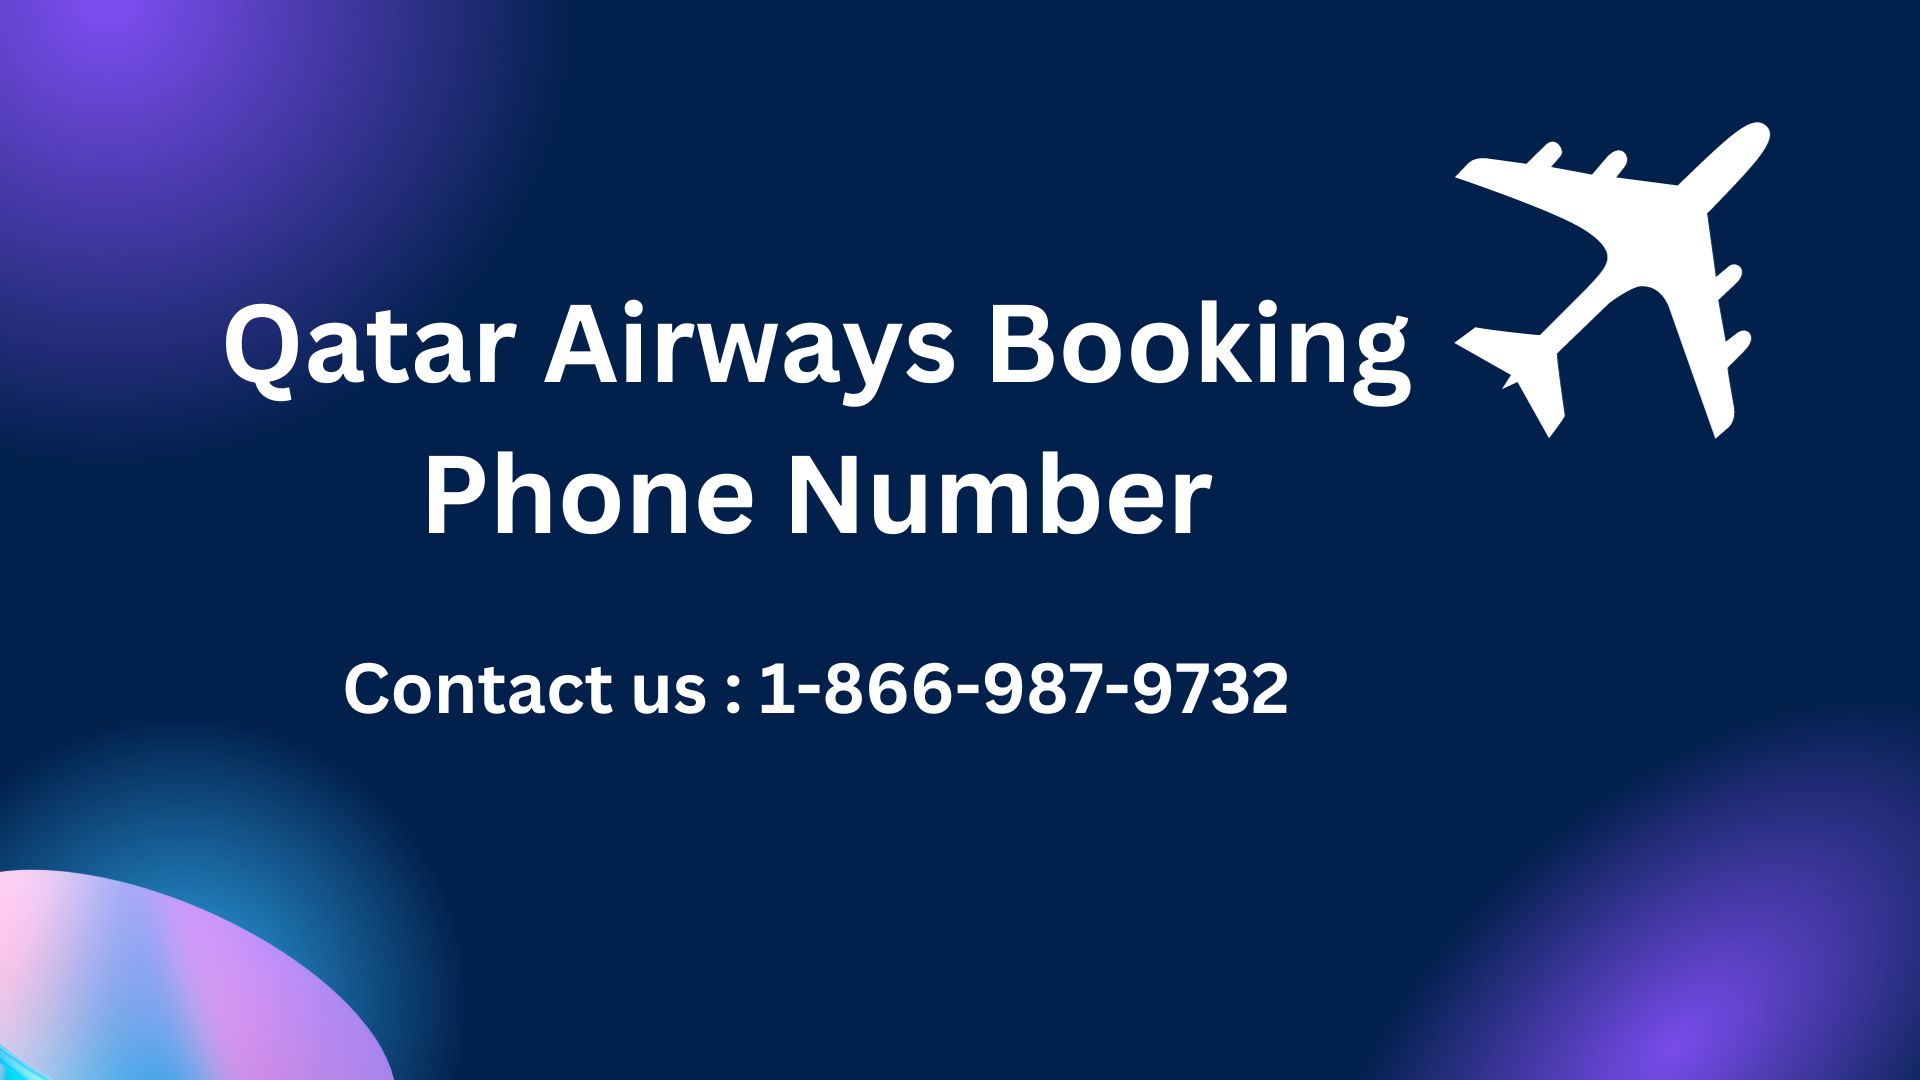 Qatar Airways Booking Phone Number